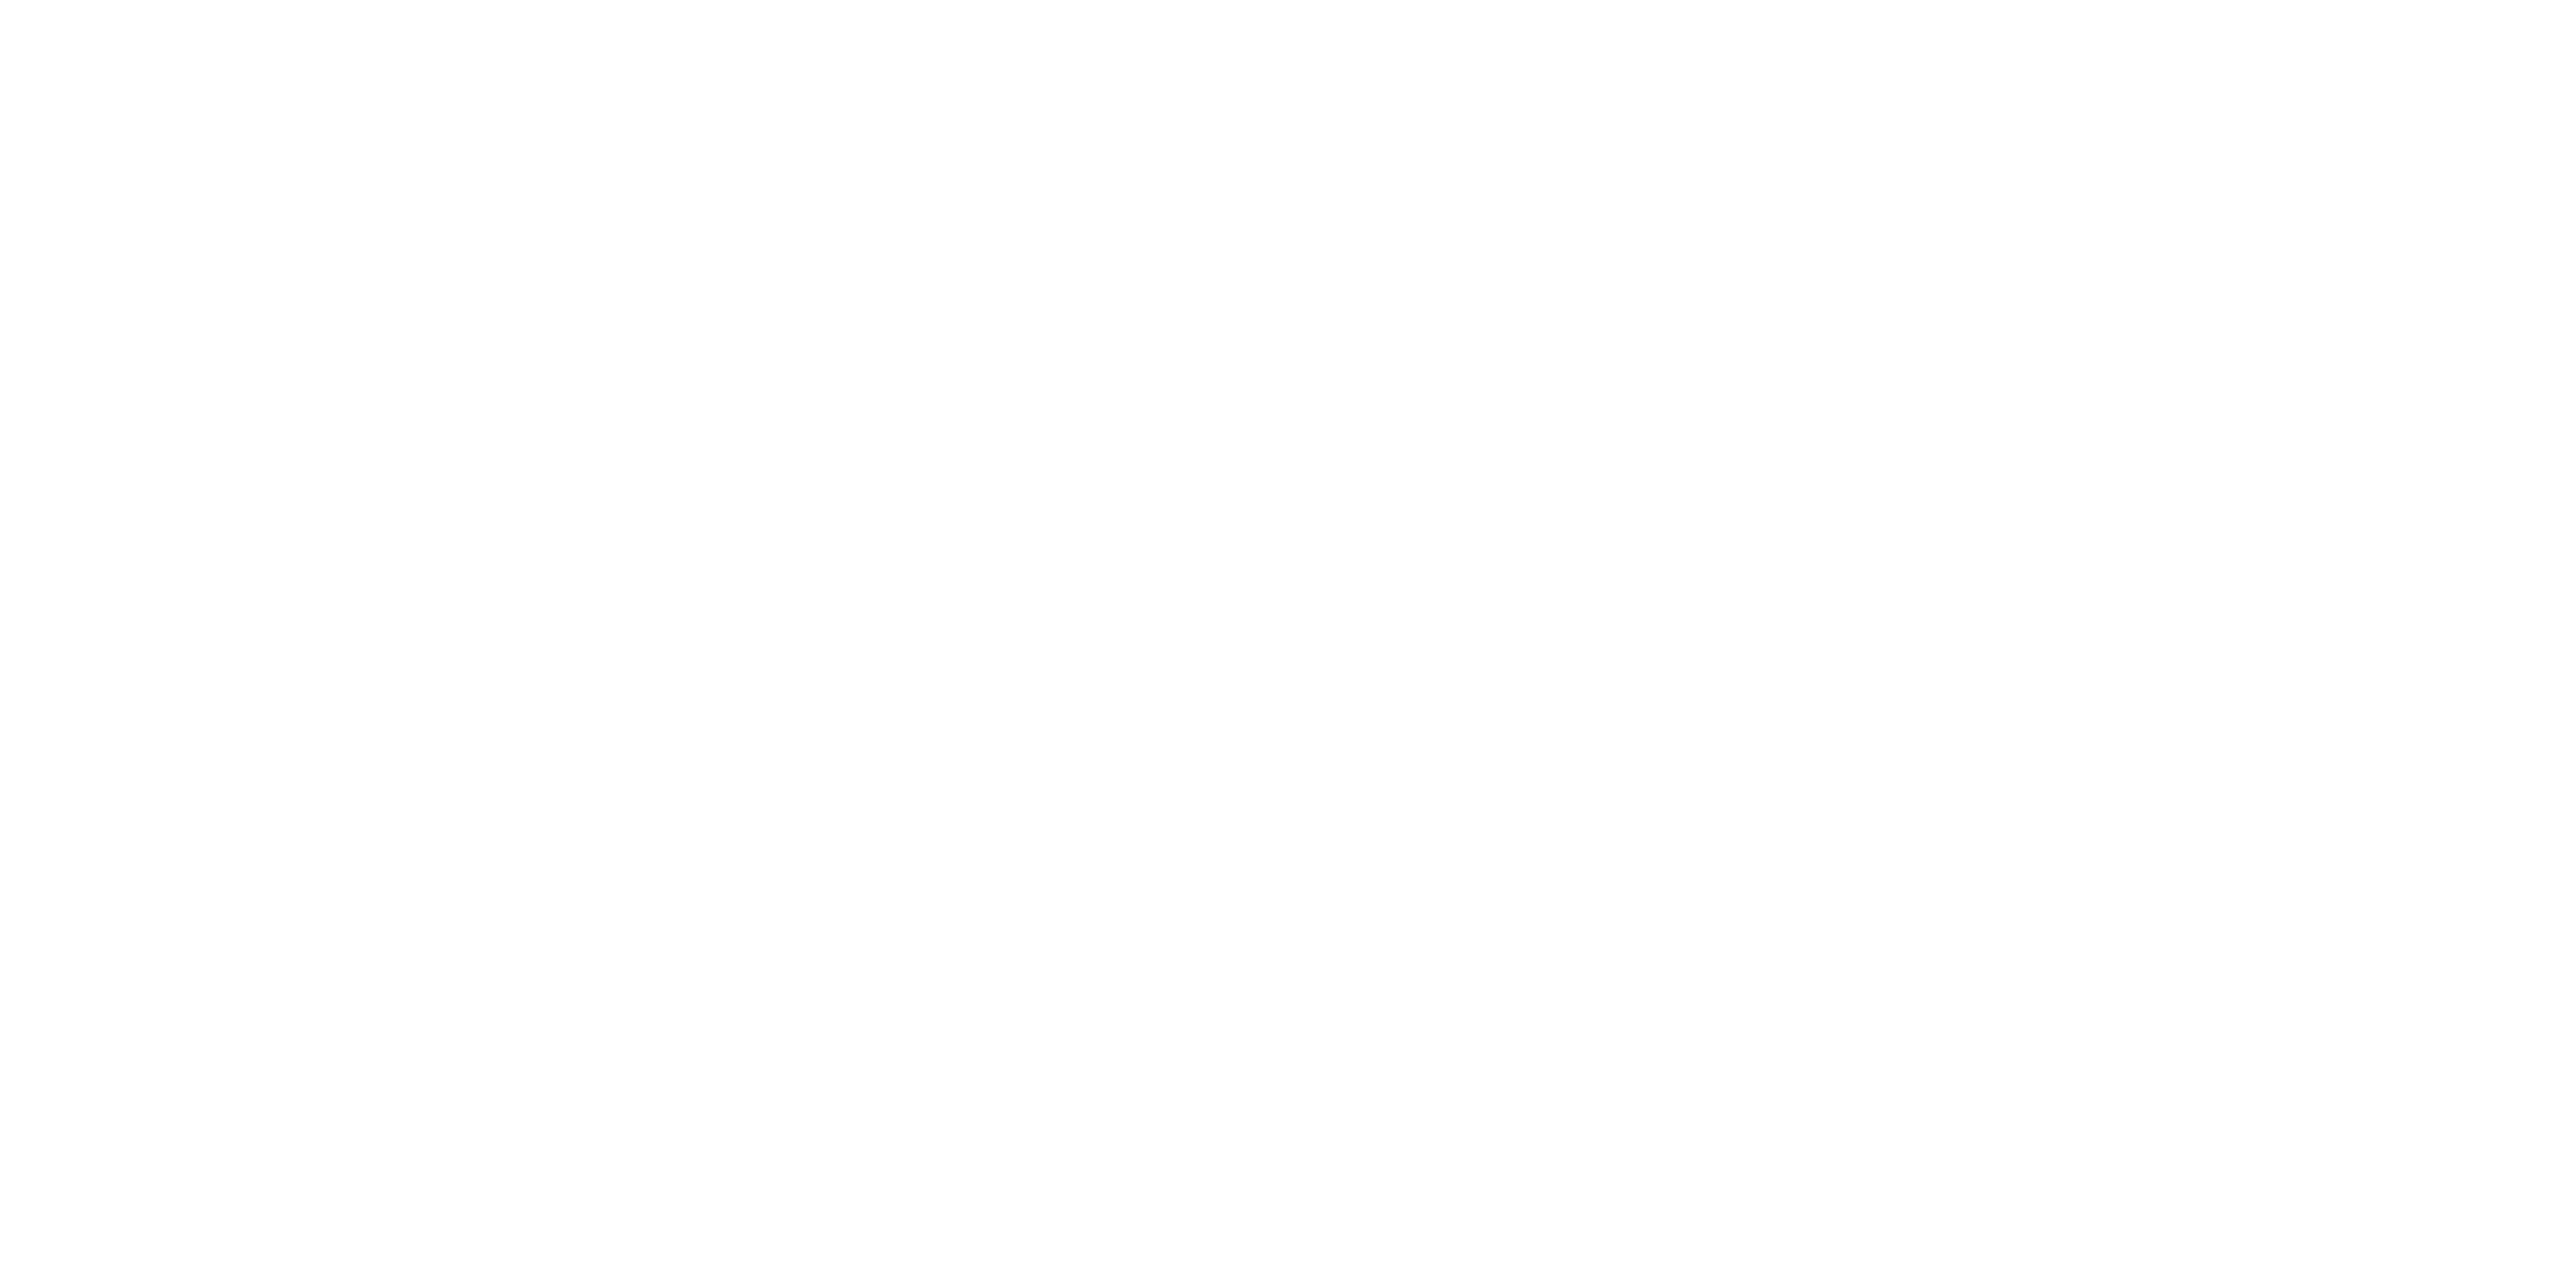 Department of Education - Victoria